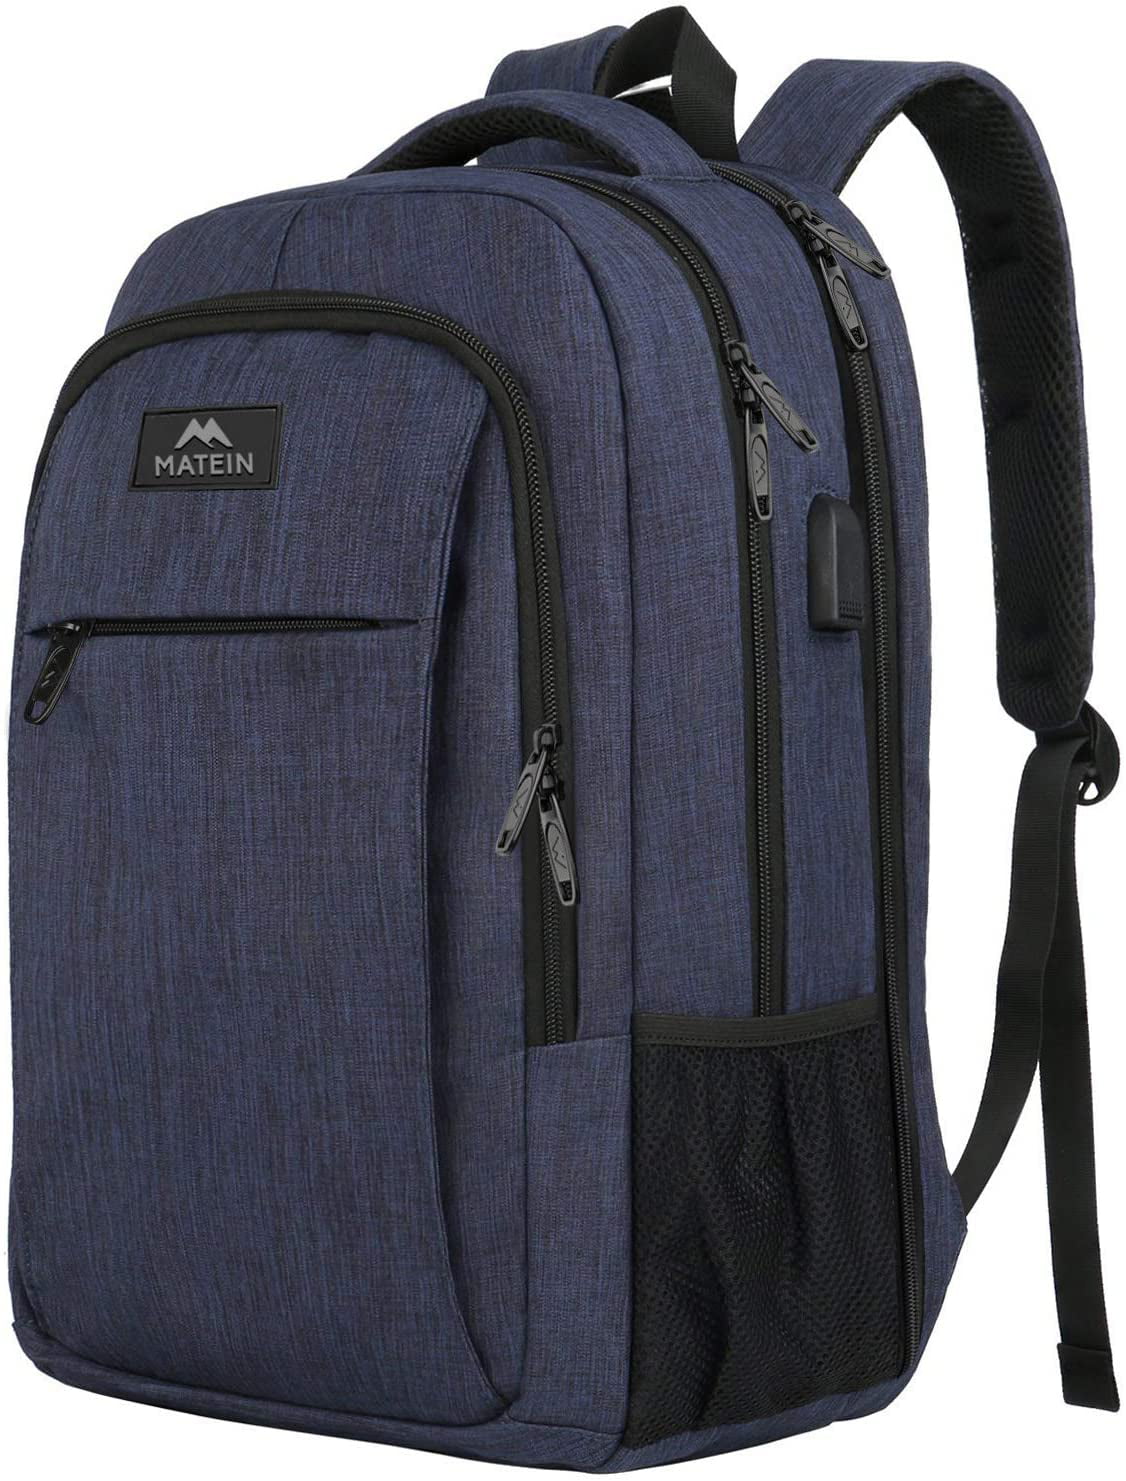 Travel Laptop Backpack Fits 17 Inch Laptop,B Work Bag Lightweight Laptop Bag with USB Charging Port 